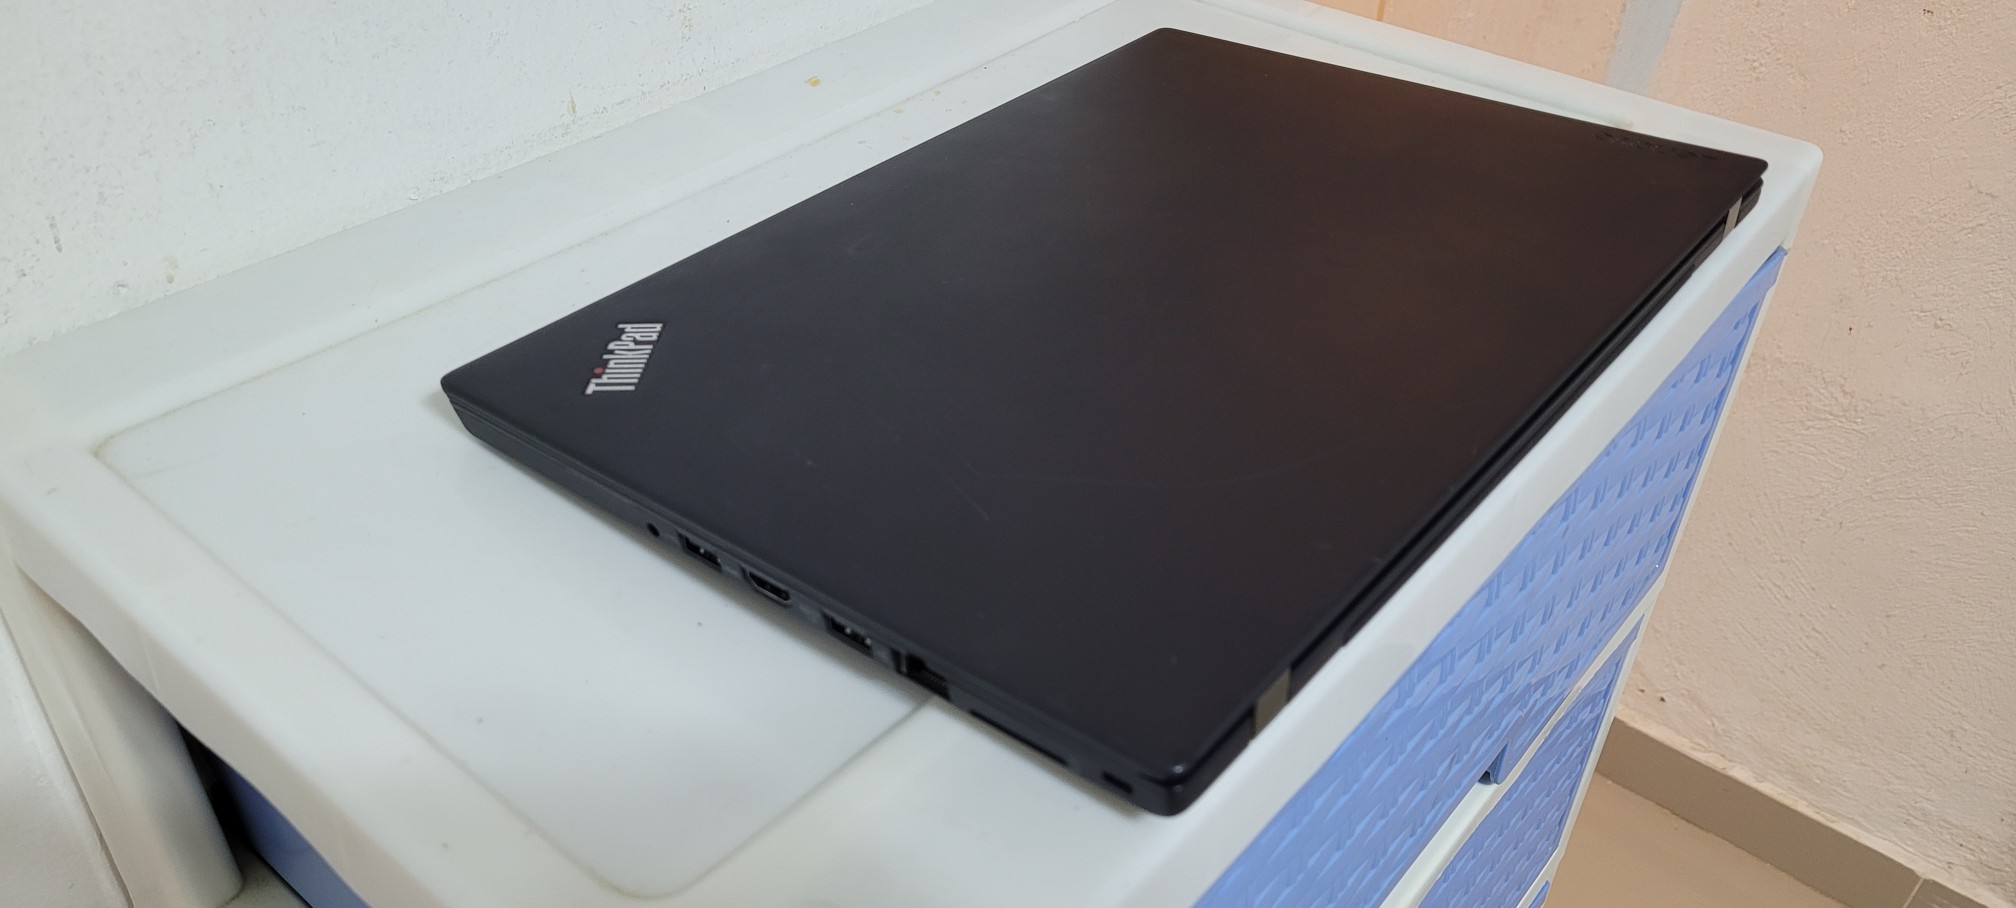 computadoras y laptops - Lenovo T470 14 Pulg Core i7 7ma Gen Ram 12gb ddr4 Disco 256gb SSD Video 6gb 2